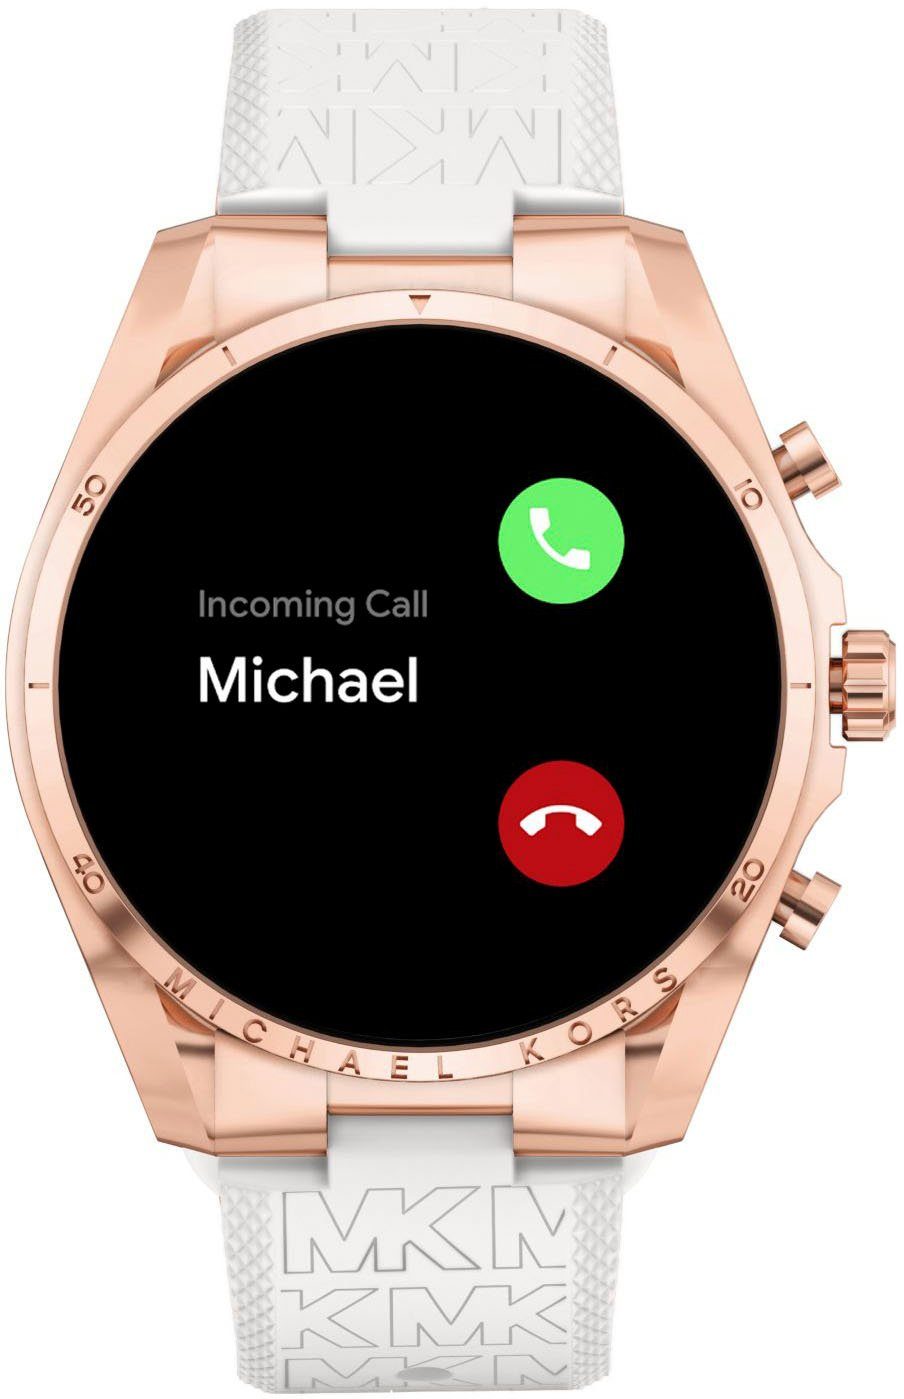 MICHAEL KORS ACCESS GEN 6 (Wear Google) BRADSHAW, MKT5153 by Smartwatch OS